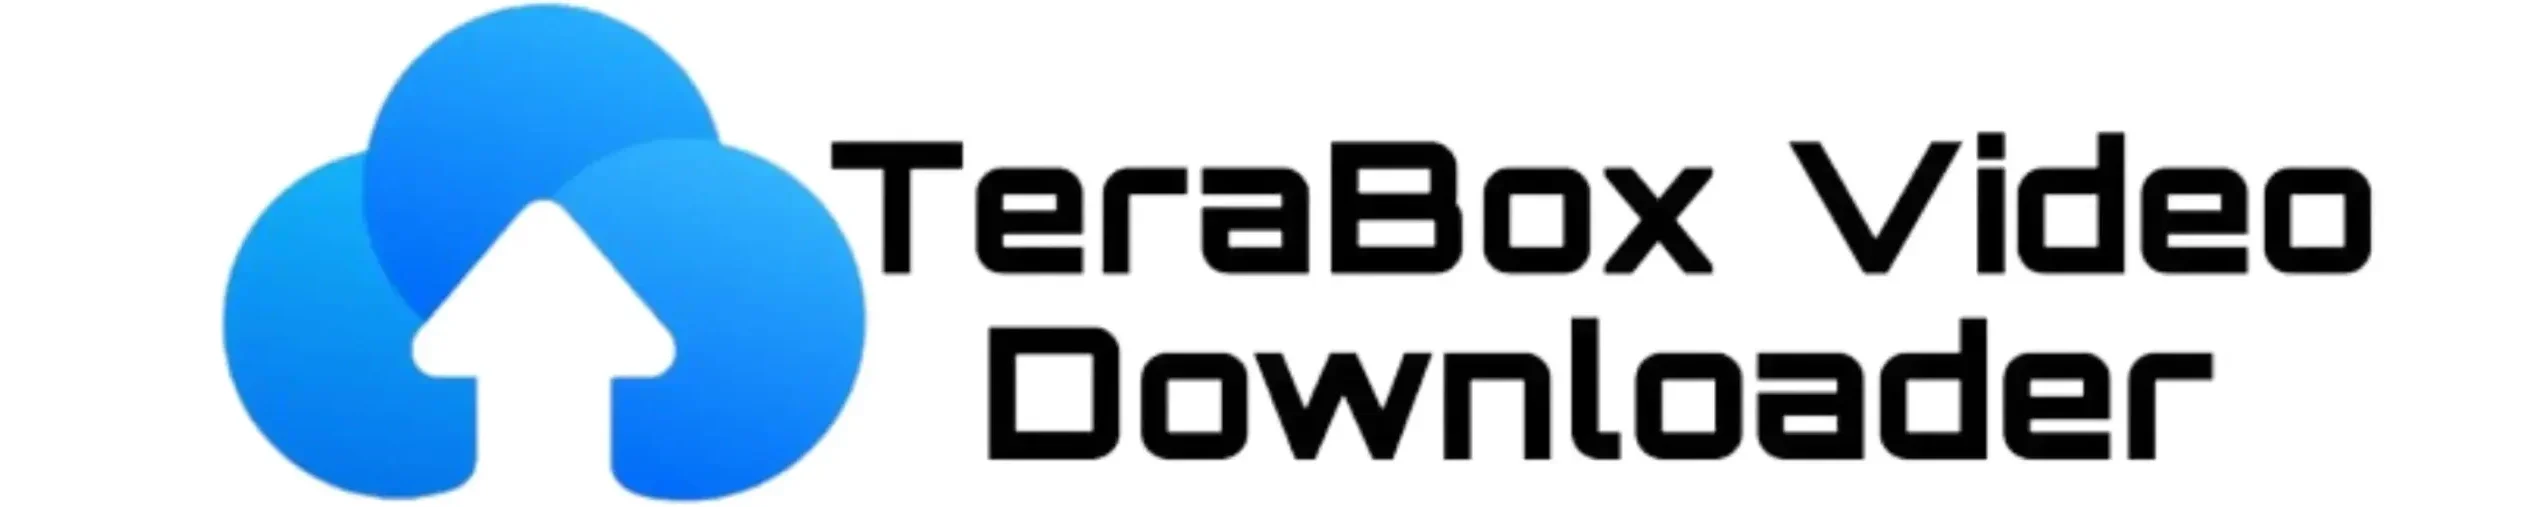 TeraBox Video Downloader